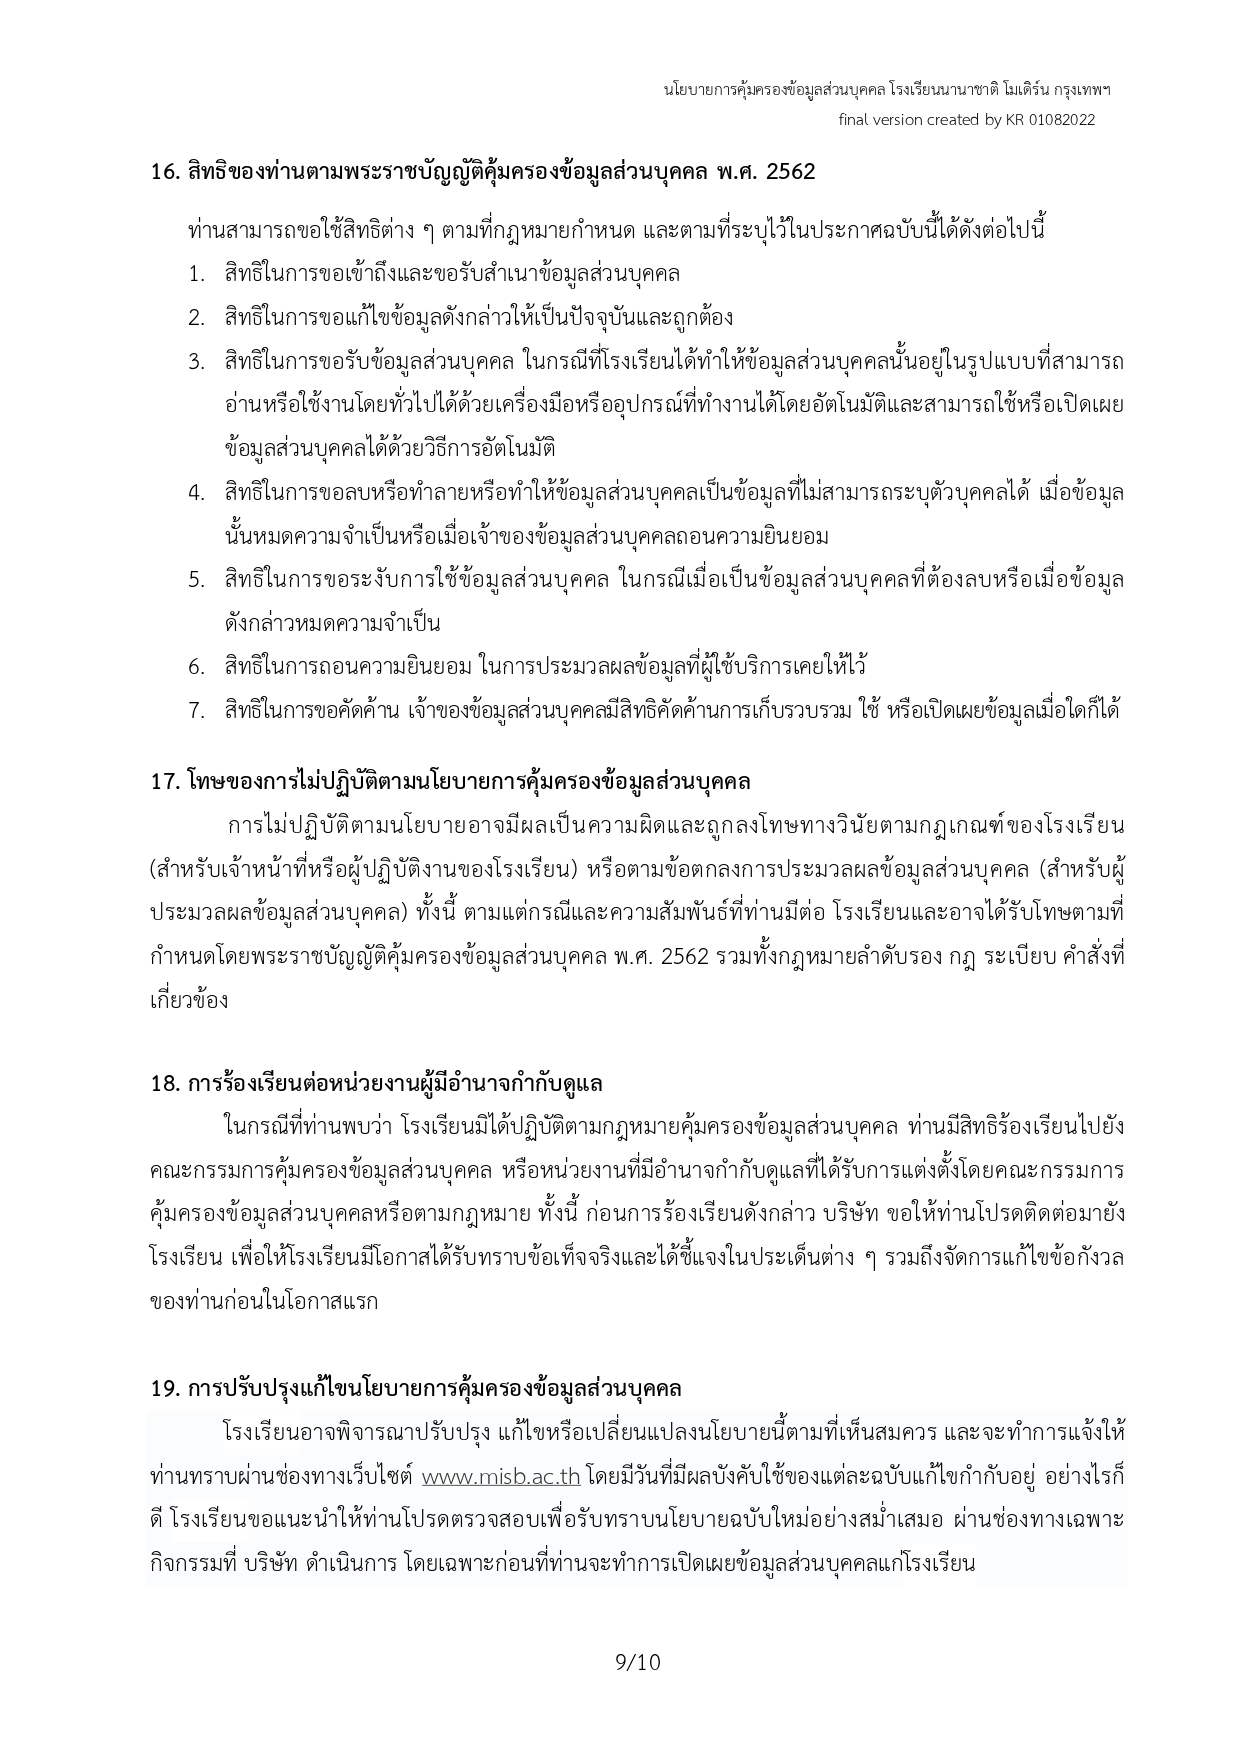 PDPA MISB ภาษาไทย final version 01012566 ไม่ลงชื่อ page 0009